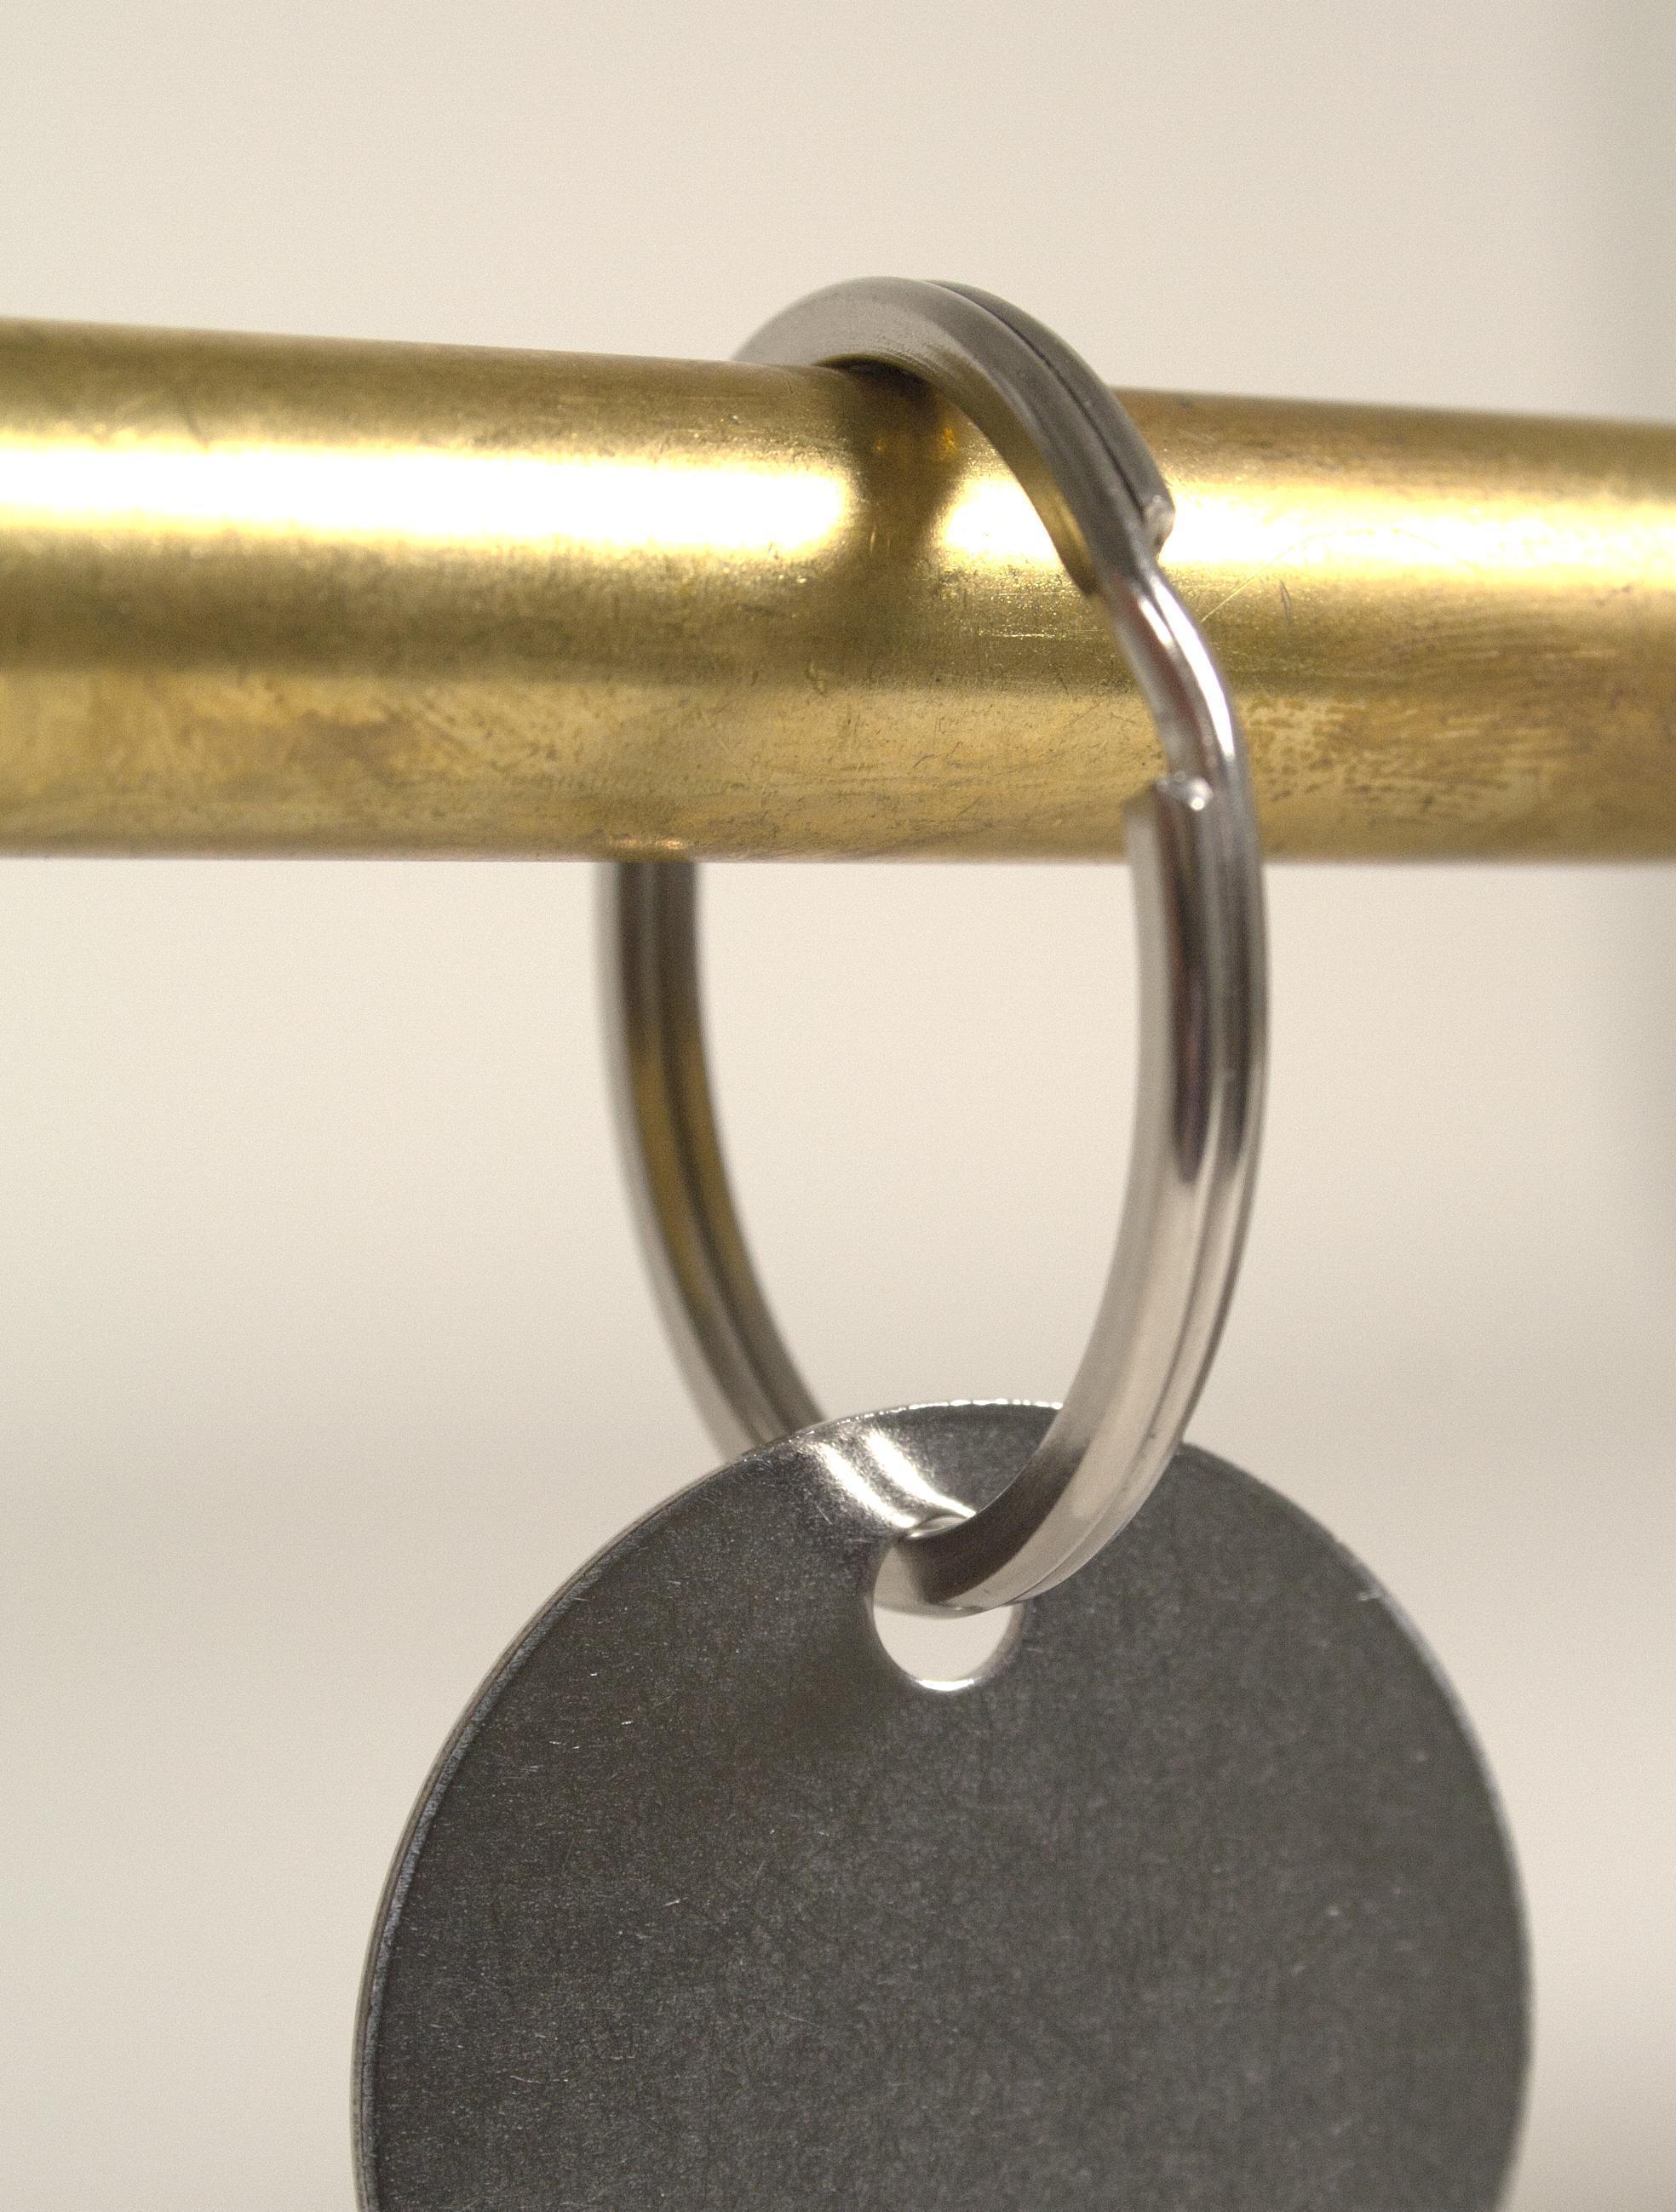 C.H.Hanson® 40082 Key Ring, 1 in ID Split Ring, Tempered Spring Steel